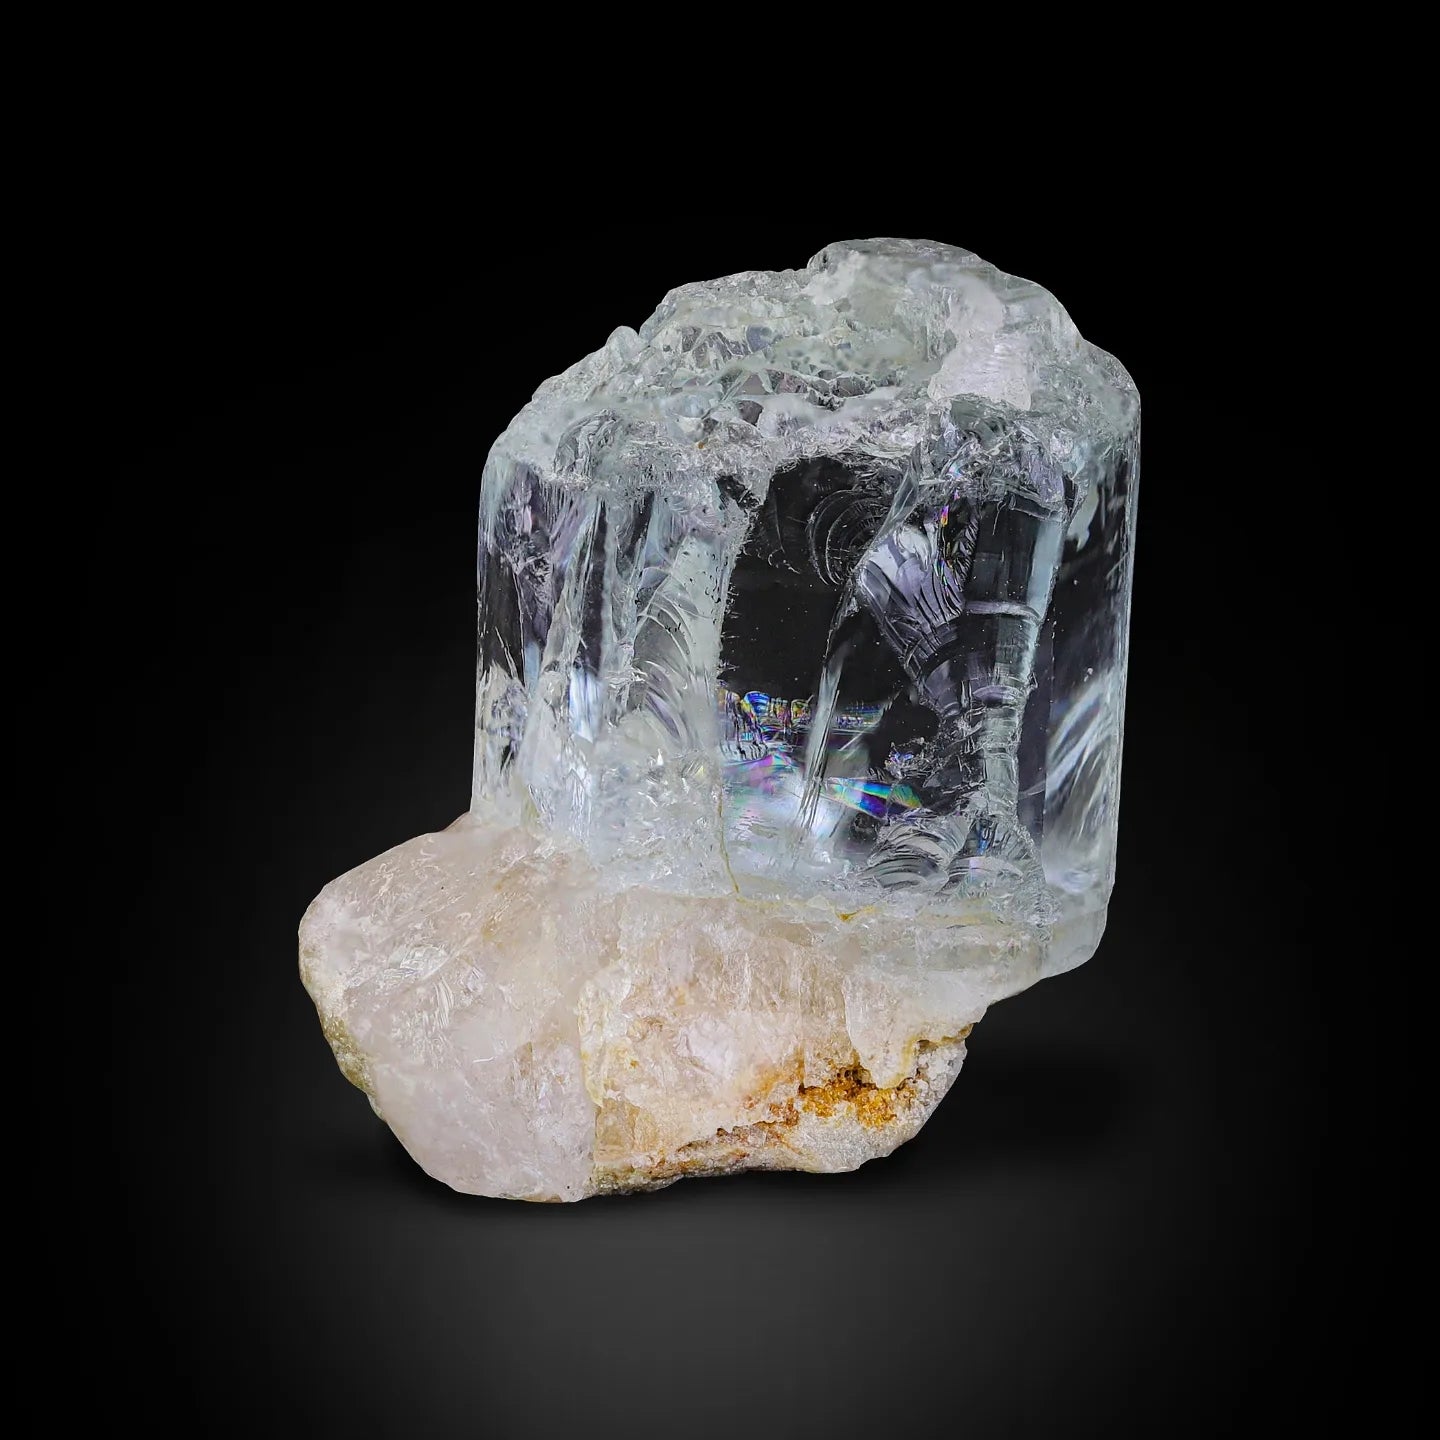 Etched Aquamarine Crystal on Matrix from Skardu, Pakistan